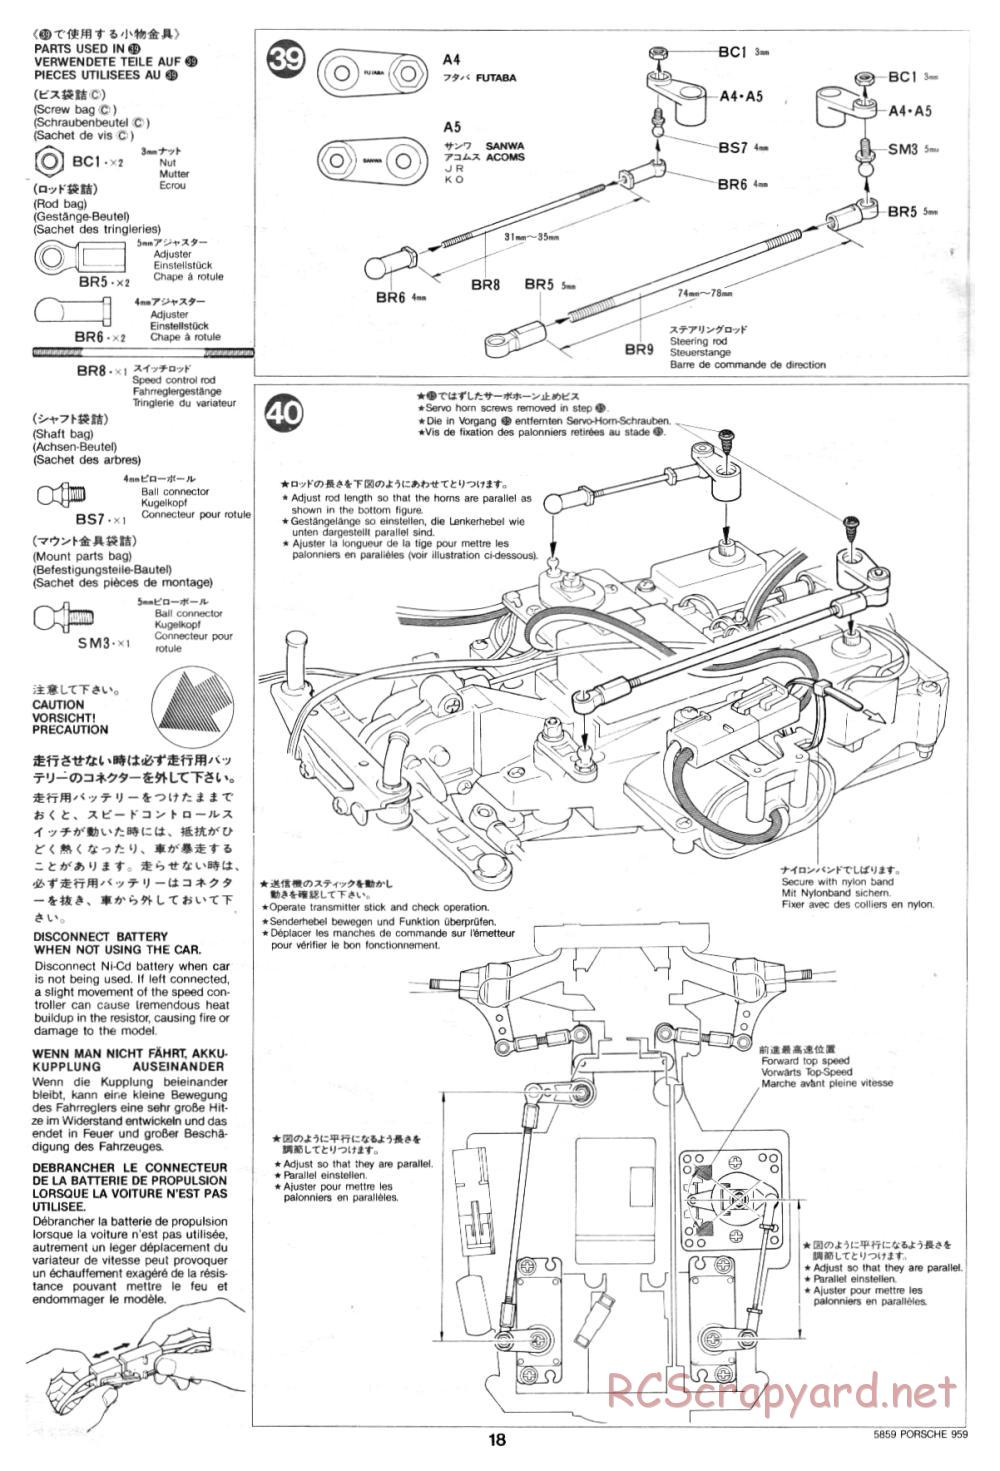 Tamiya - Porsche 959 - 58059 - Manual - Page 18